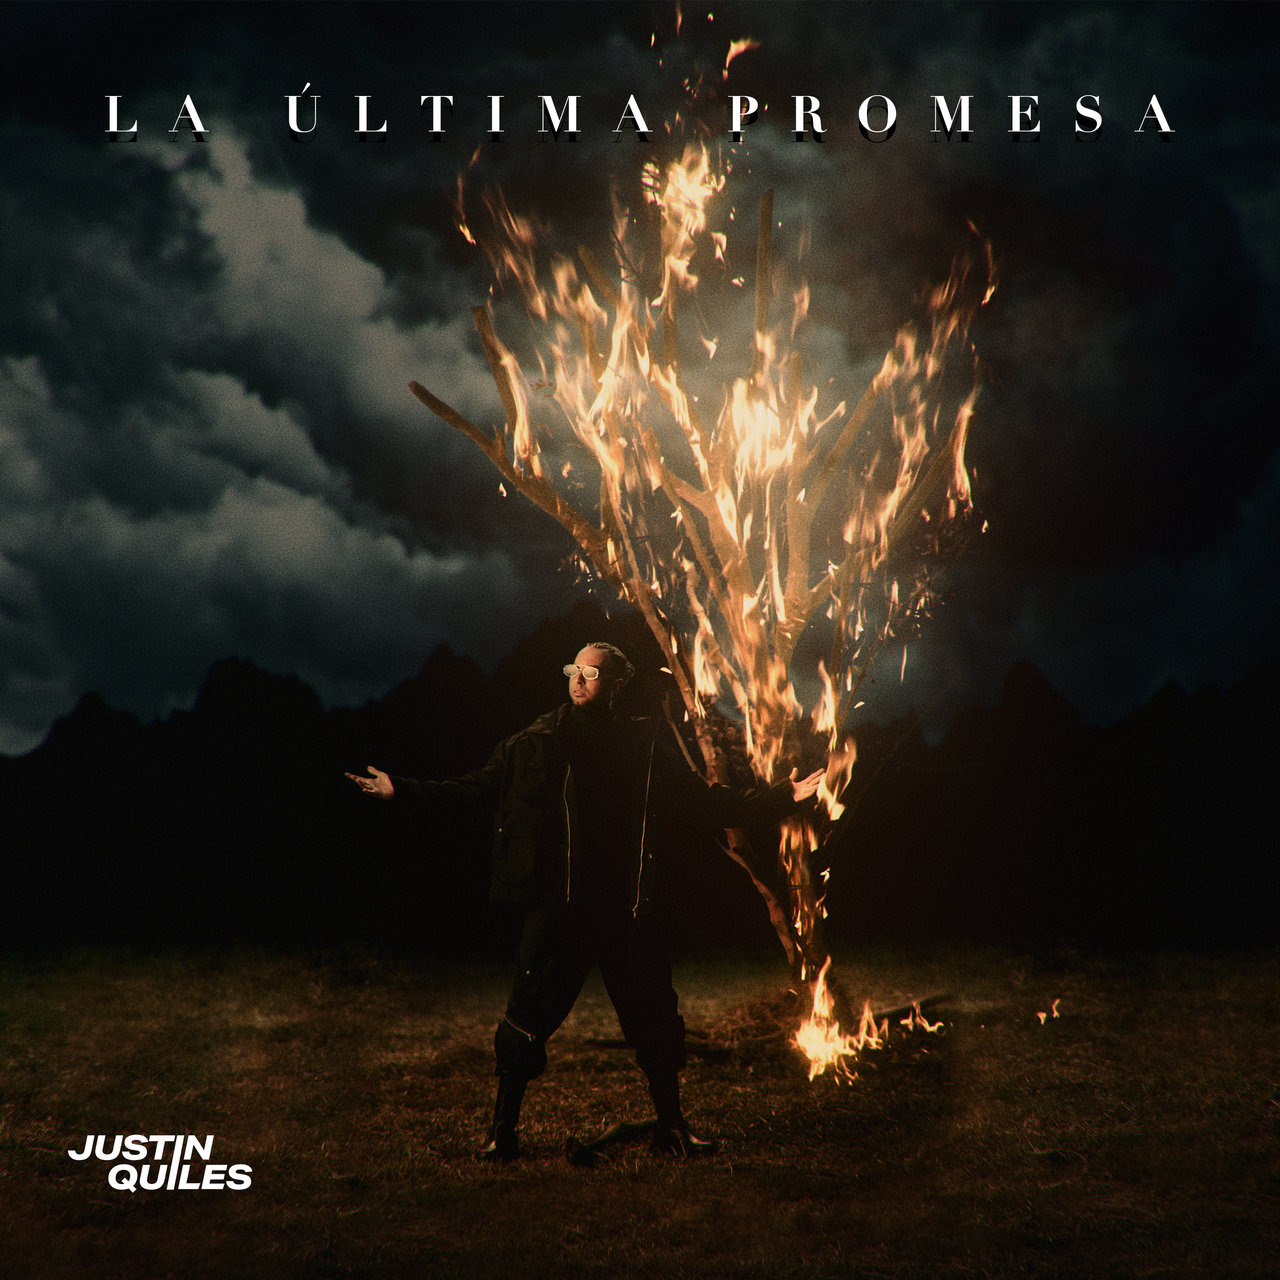 Justin Quiles — Colorín Colorado cover artwork